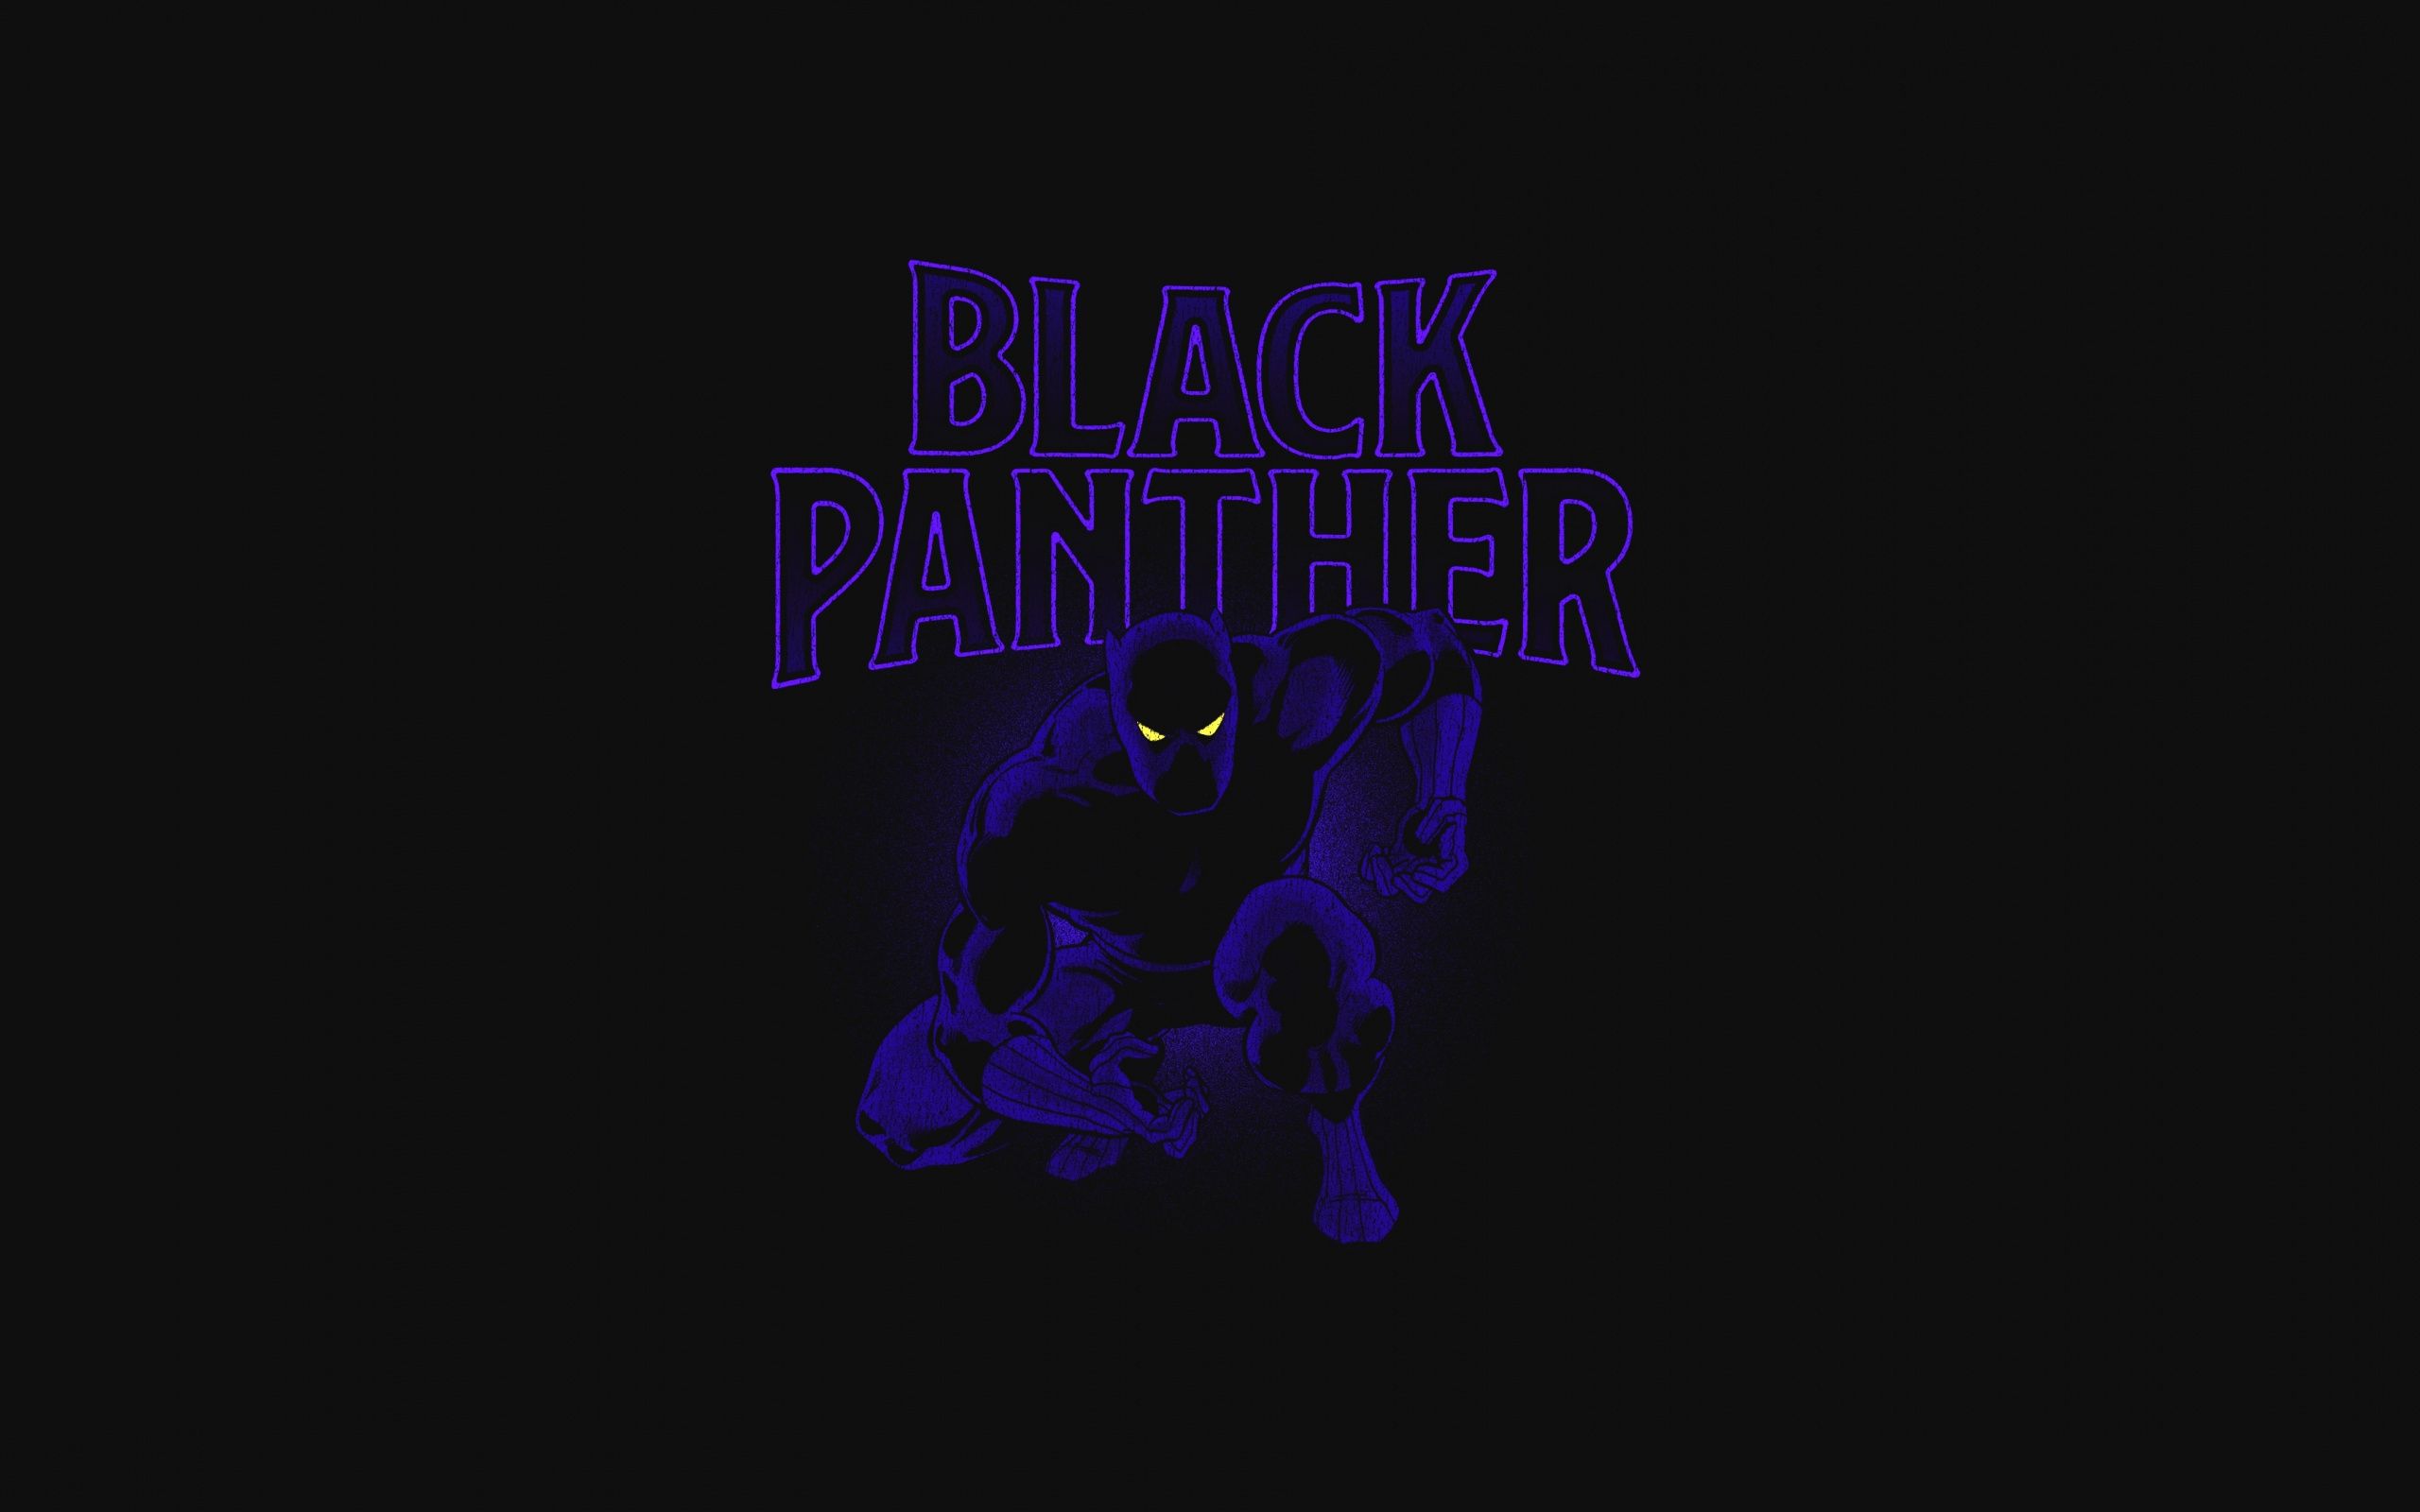 Download Black Panther, minimal, artwork, dark wallpaper, 2560x Dual Wide, Widescreen 16: Widescreen